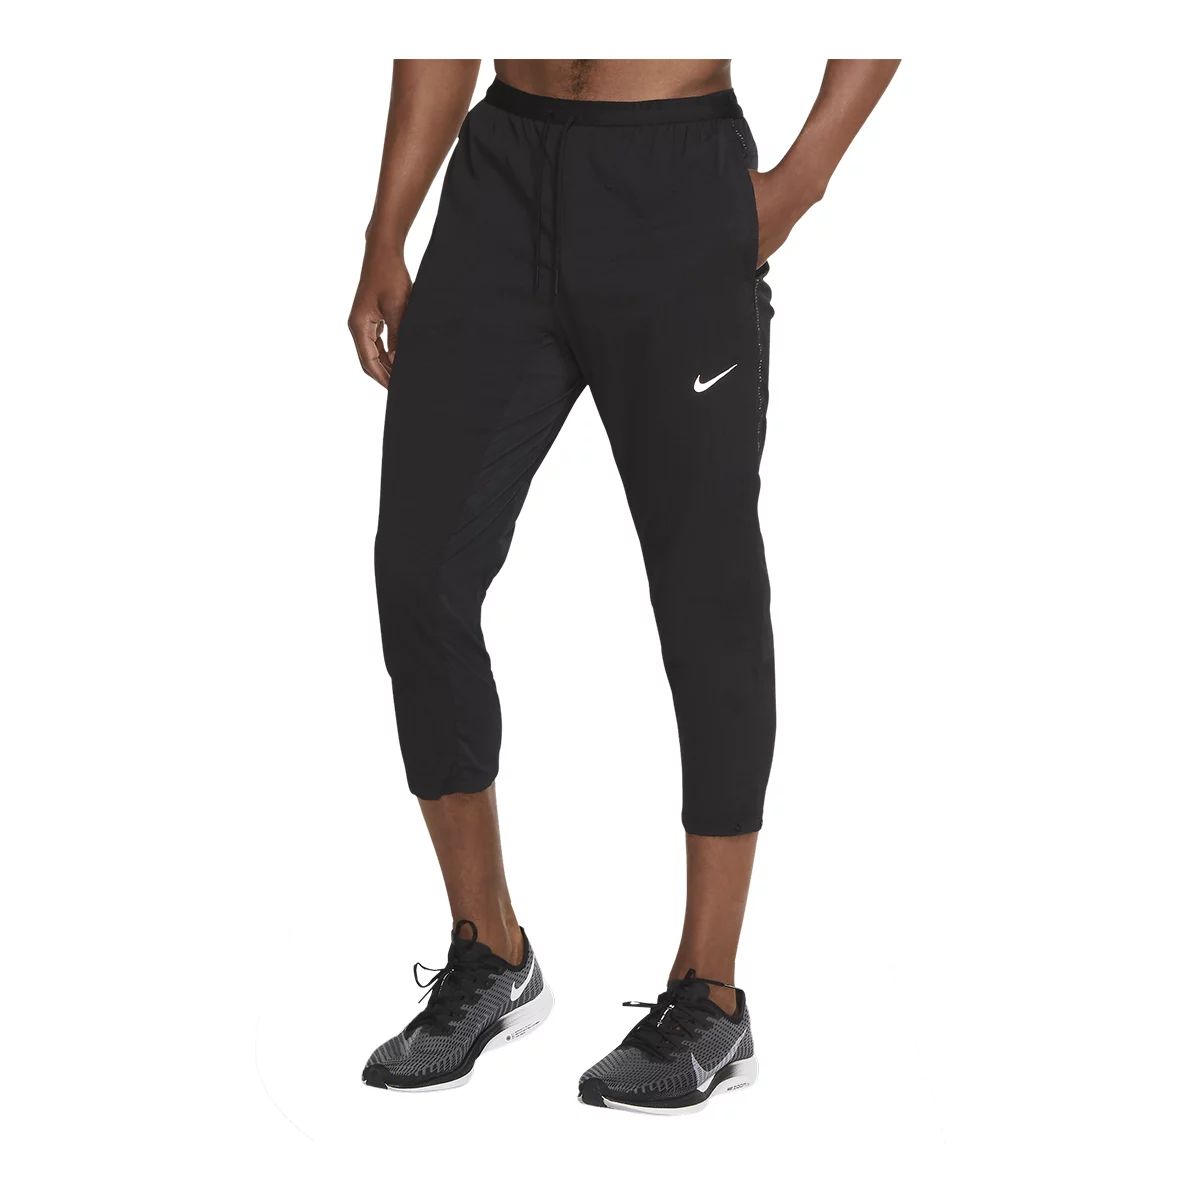 Nike - Phenom Elite - Running tights - Black / Reflective Silver | M